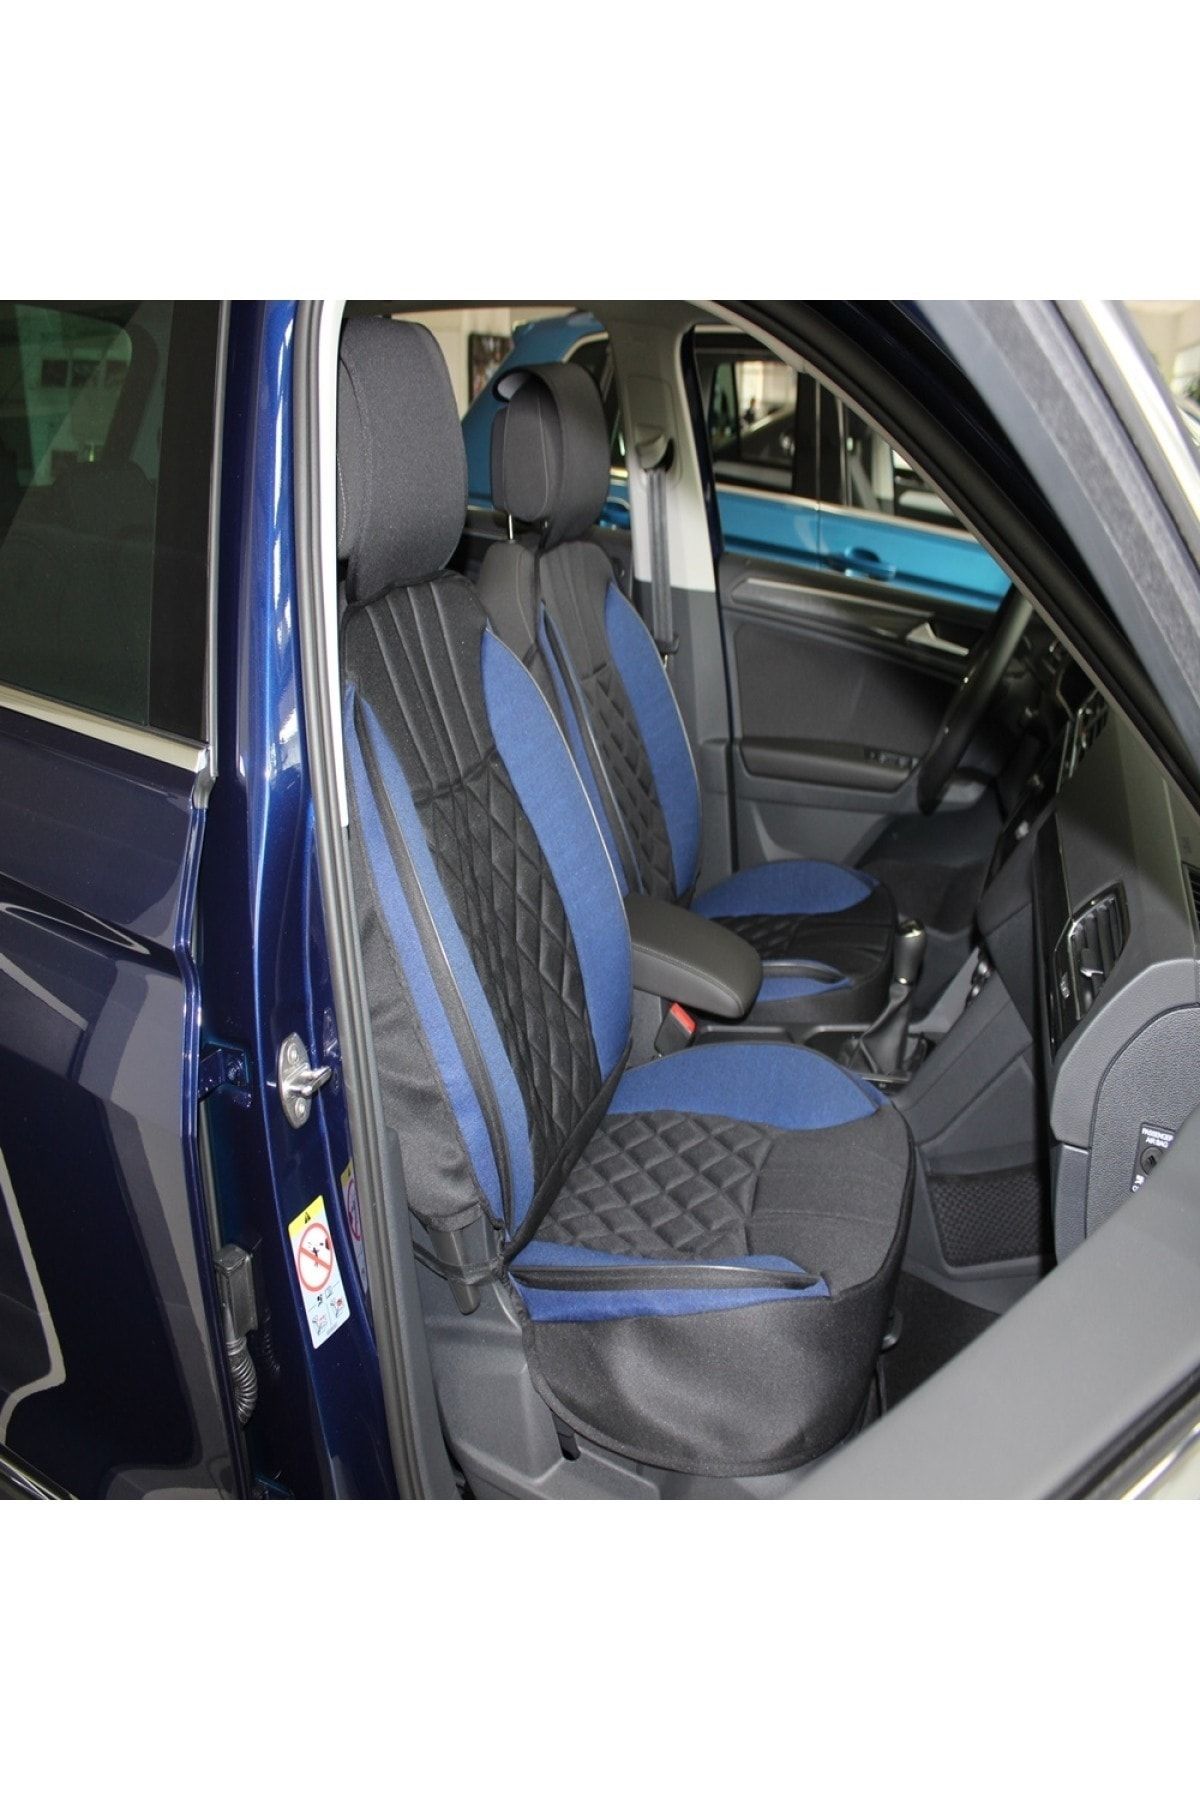 Genel Markalar Renault Megane 2 Hb-sedan Siyah-mavi Oto Koltuk Minderi Ortopedik 5'li Set Elegance Model